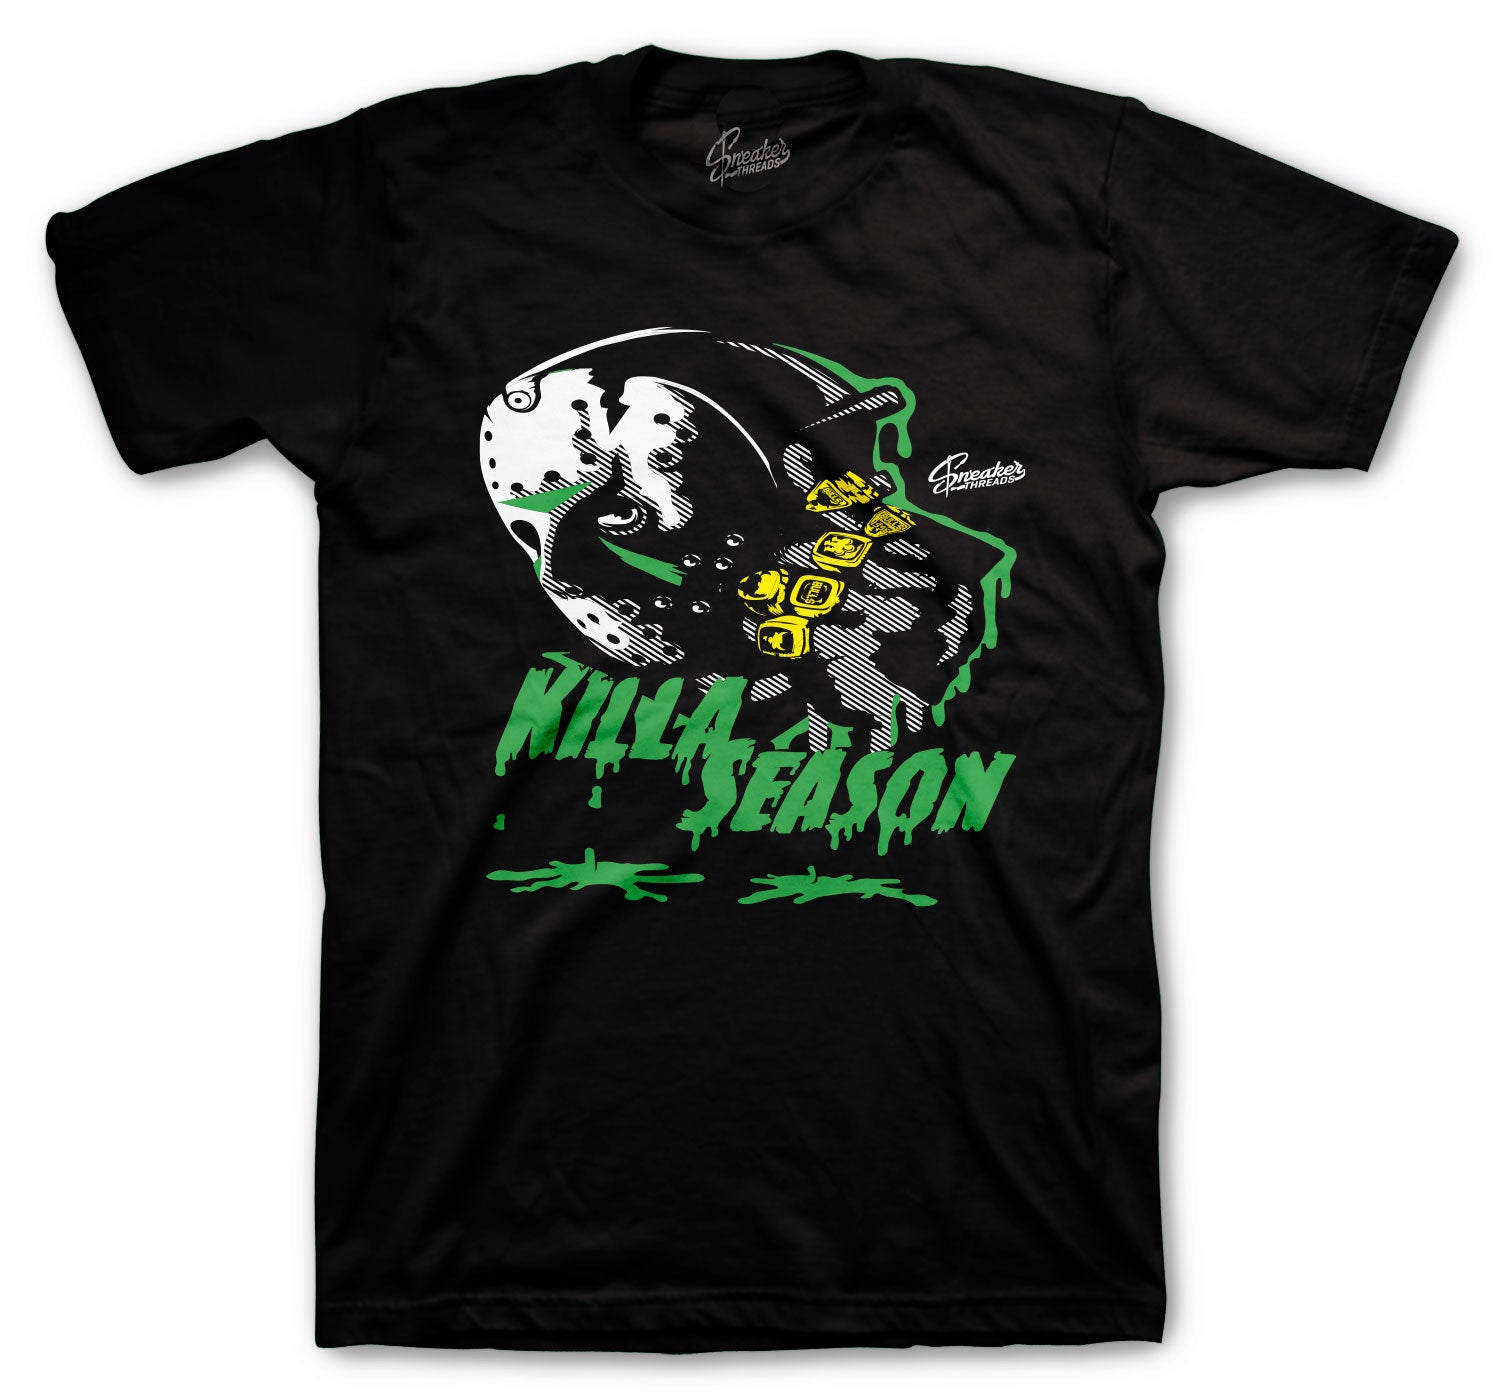 Retro 1 Lucky Green Shirt - Killa Season - Black